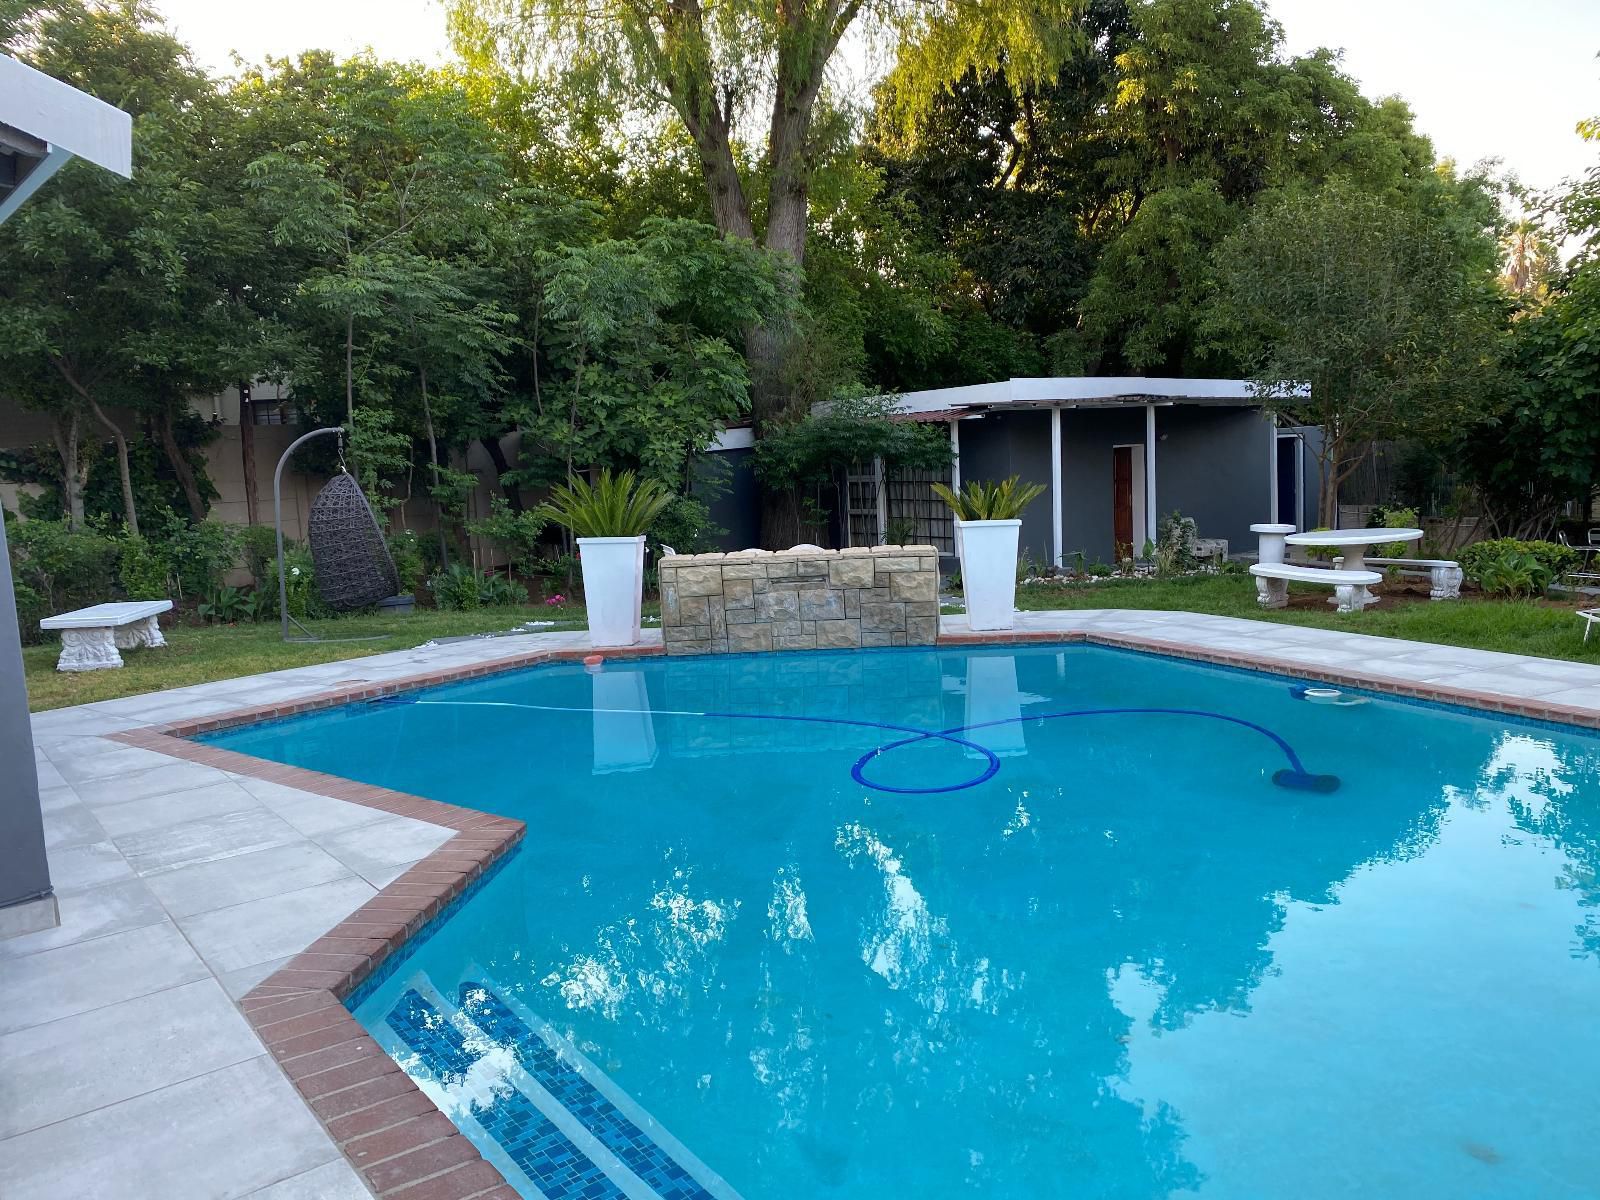 Marion Lodge Sandown Johannesburg Gauteng South Africa House, Building, Architecture, Garden, Nature, Plant, Swimming Pool